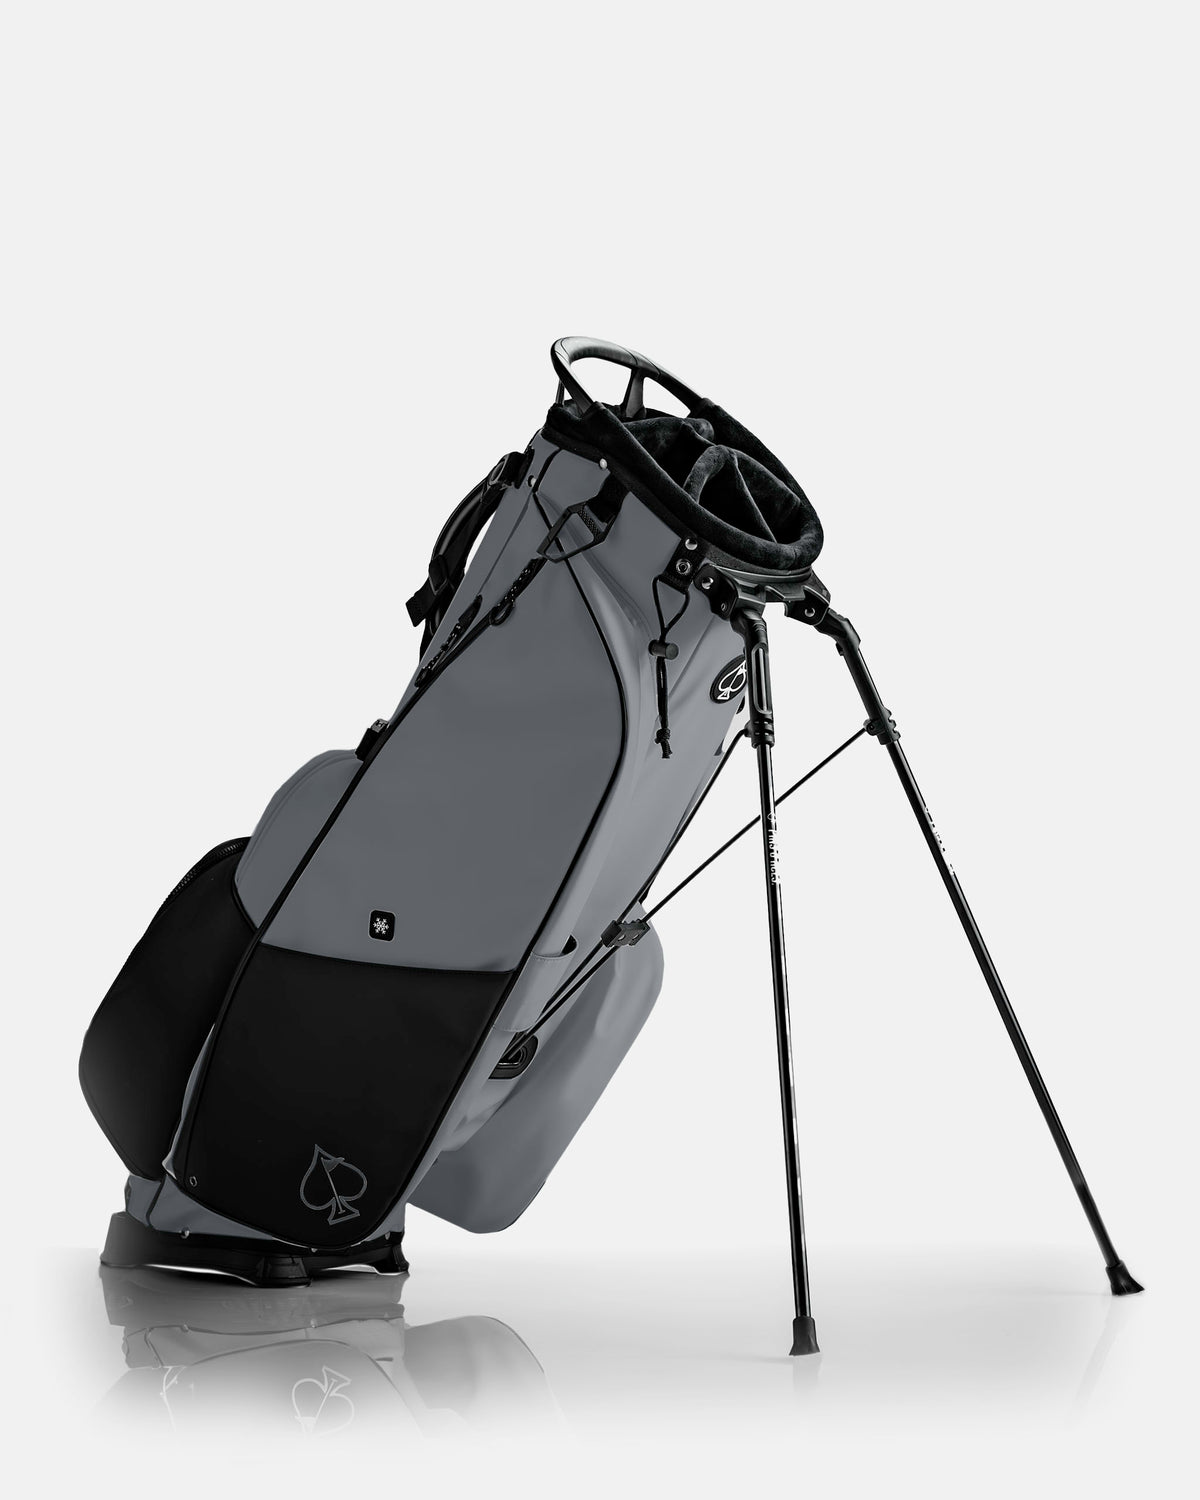 Player Preferred™ Golf Bag - Flat Ash